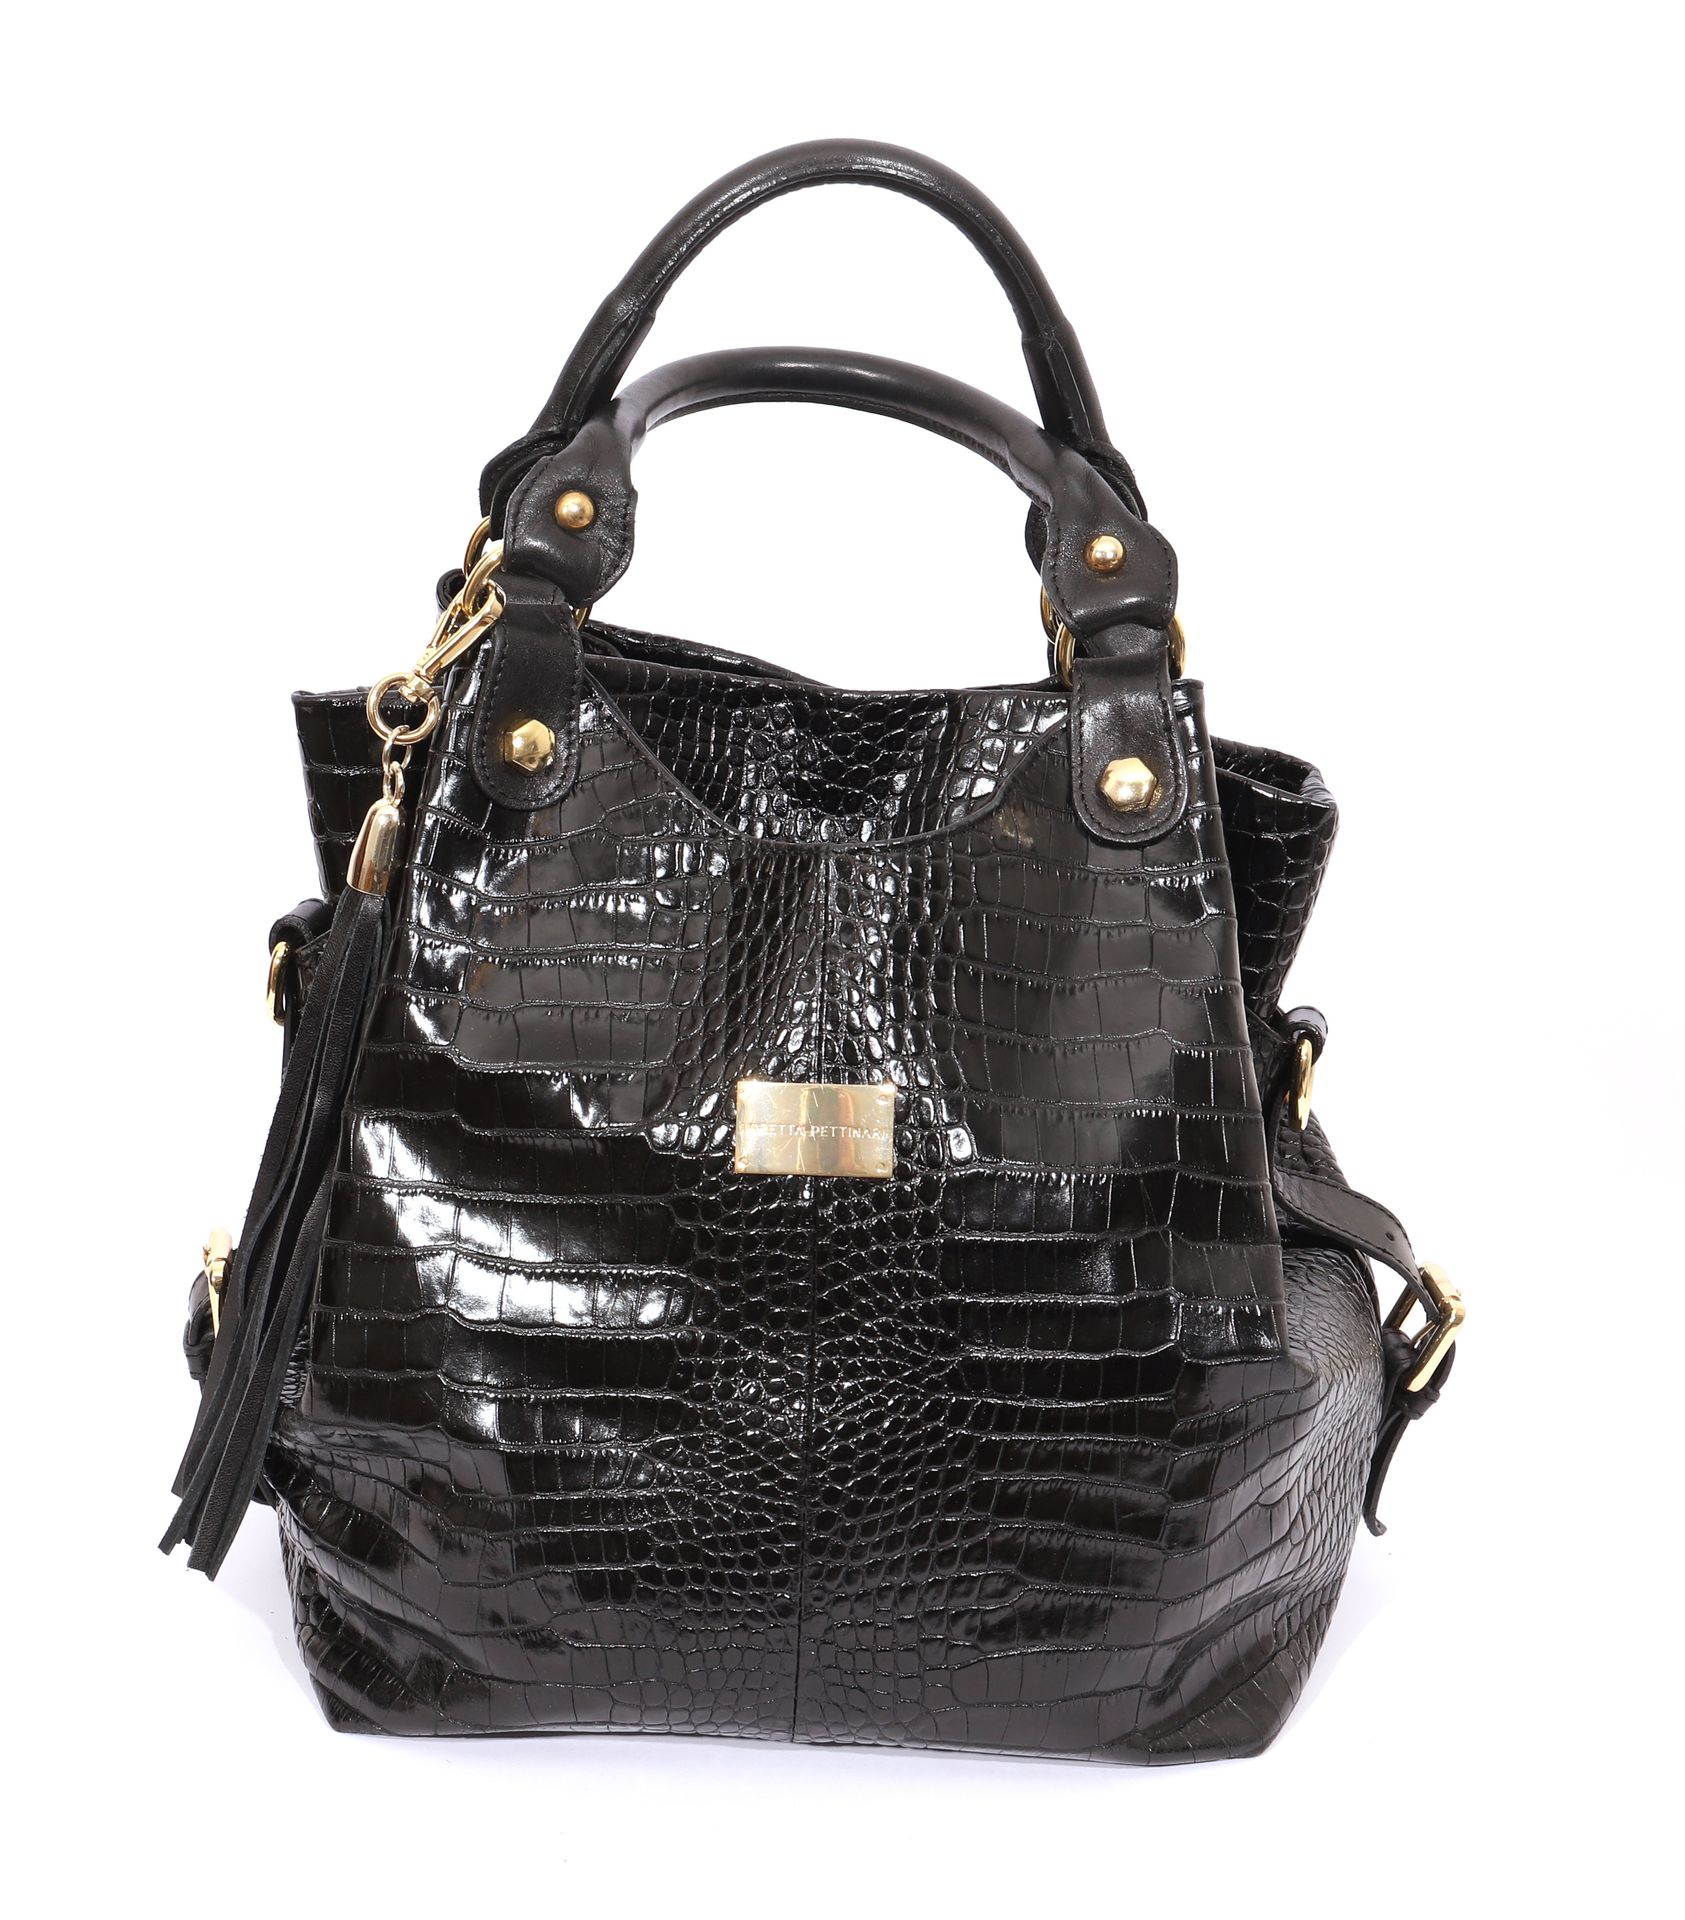 Null Loretta Pettinari

Black leather bag immitation Croco

Italian manufacture
&hellip;